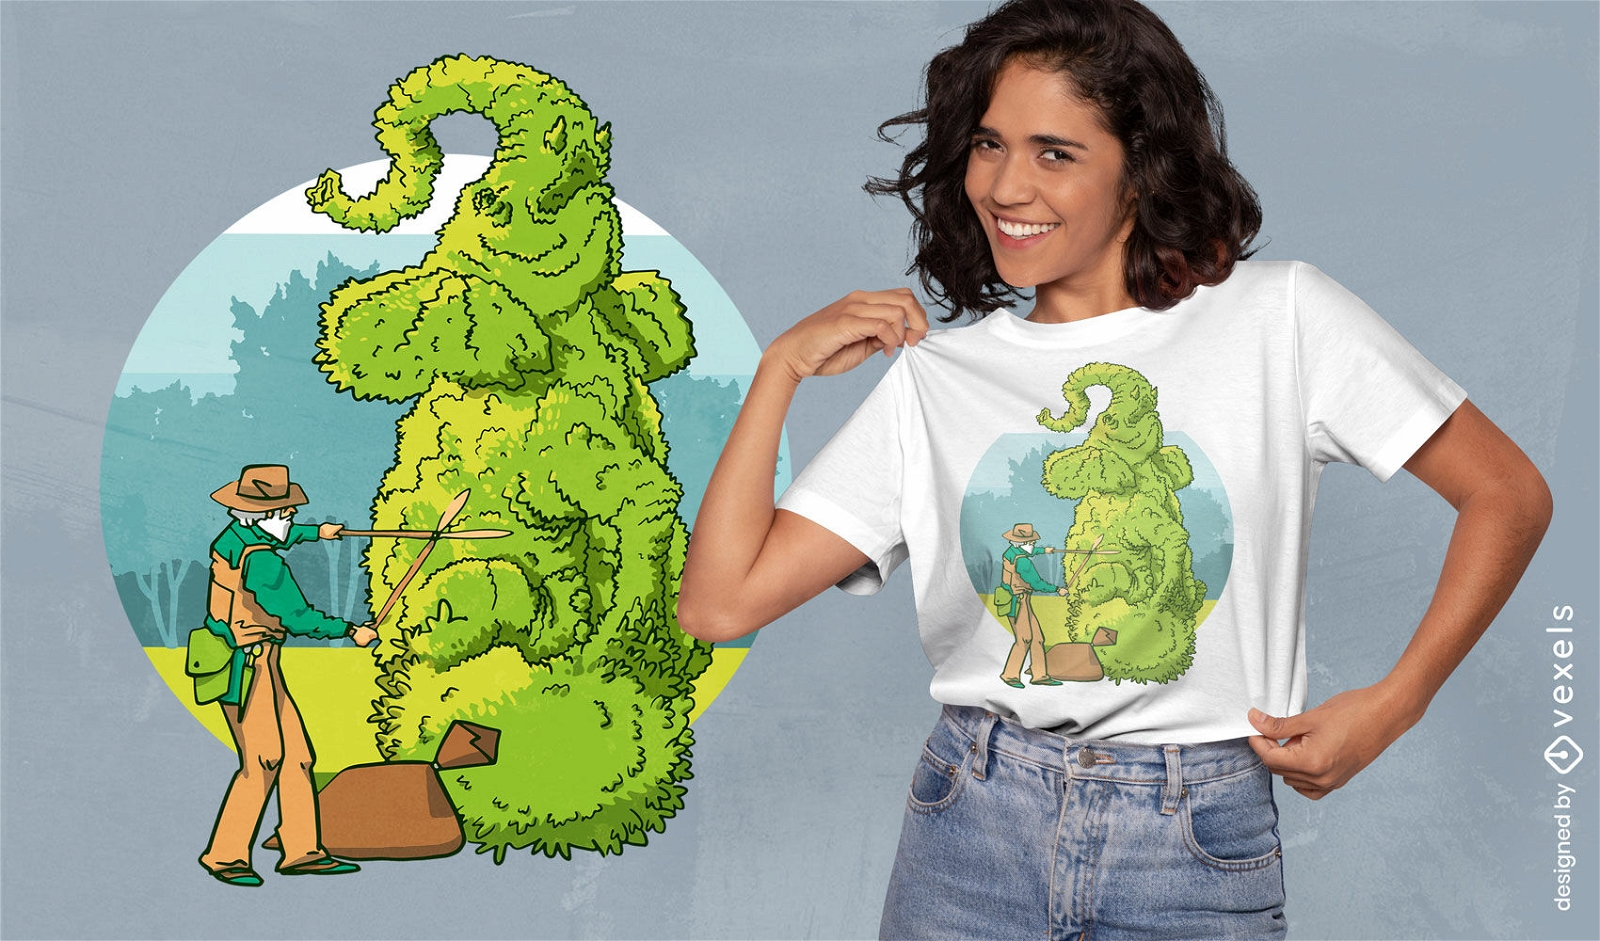 Elephant topiary gardening t-shirt design